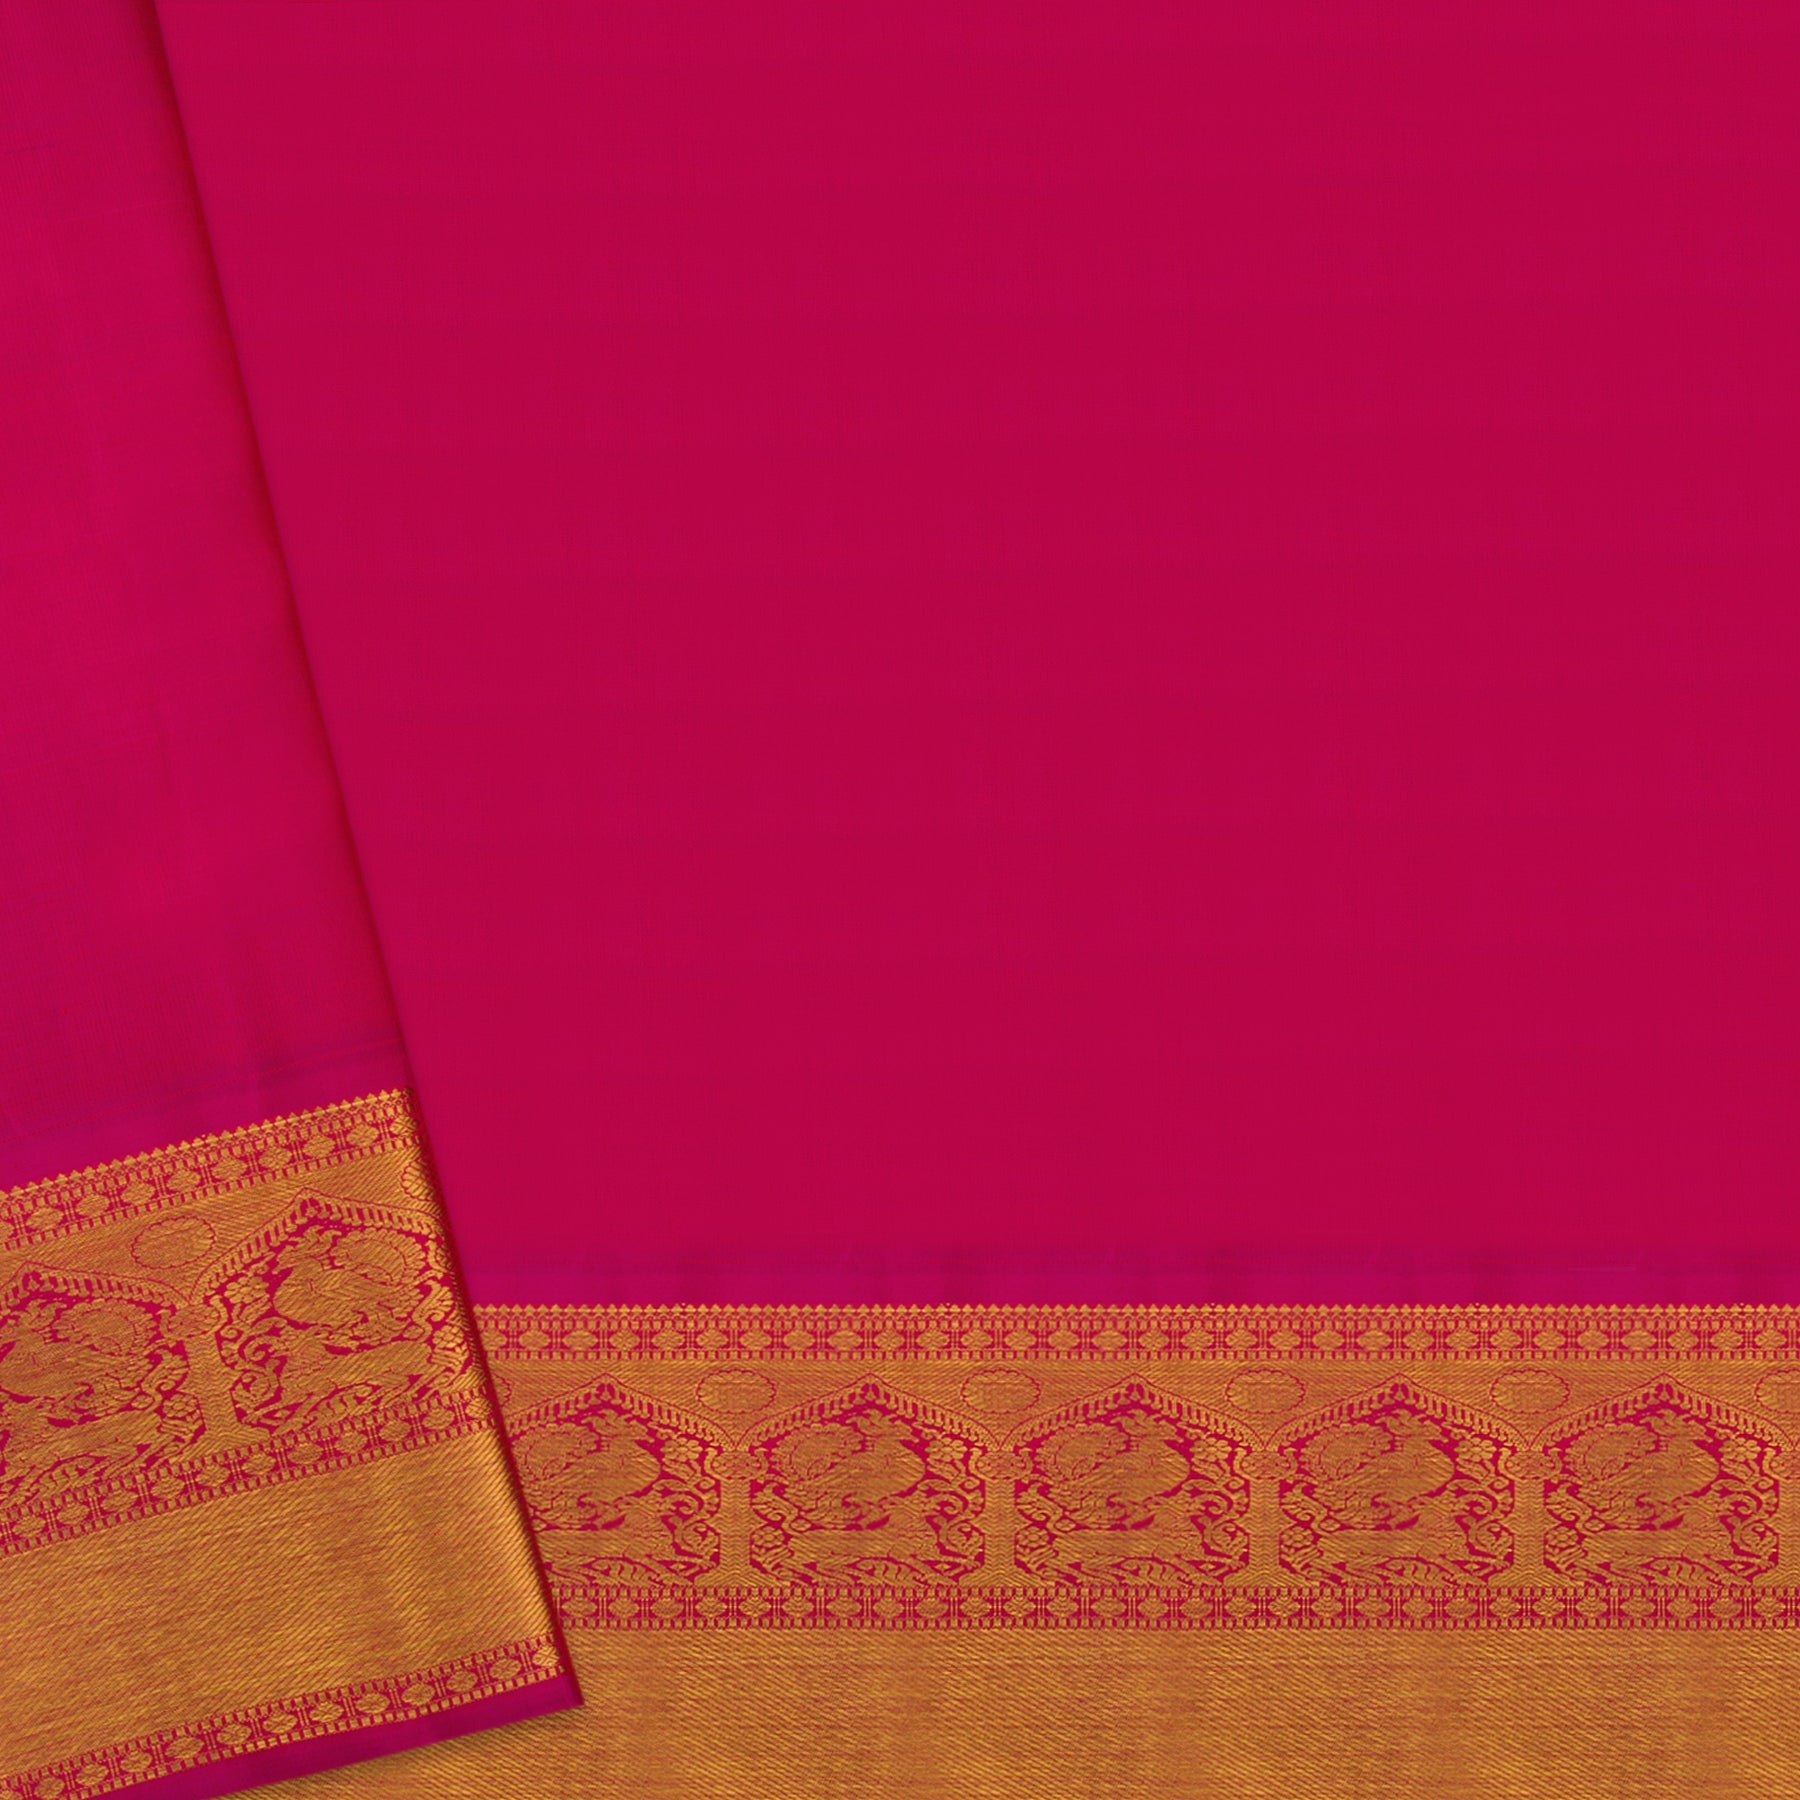 Kanakavalli Kanjivaram Silk Sari 22-110-HS001-13950 - Blouse View